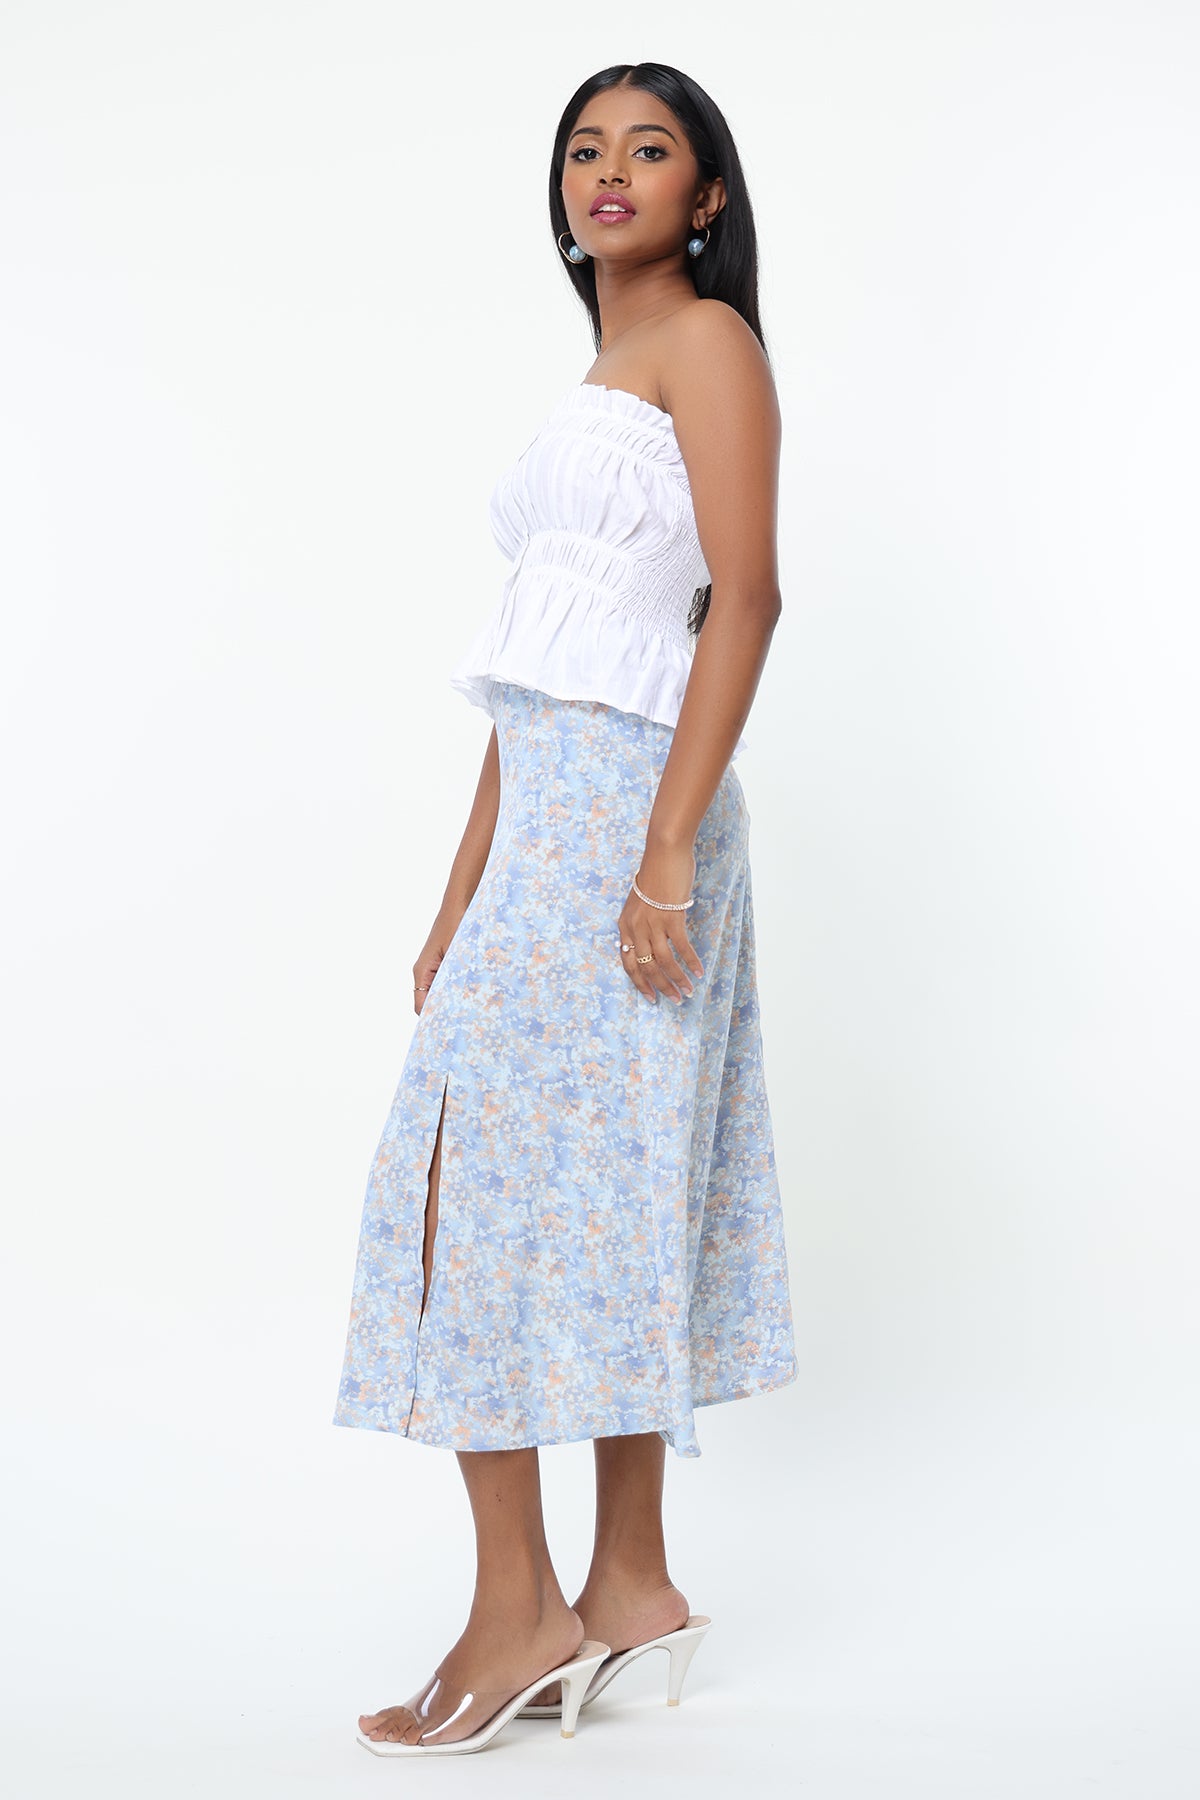 Modano Women's Normal Print Casual Skirt